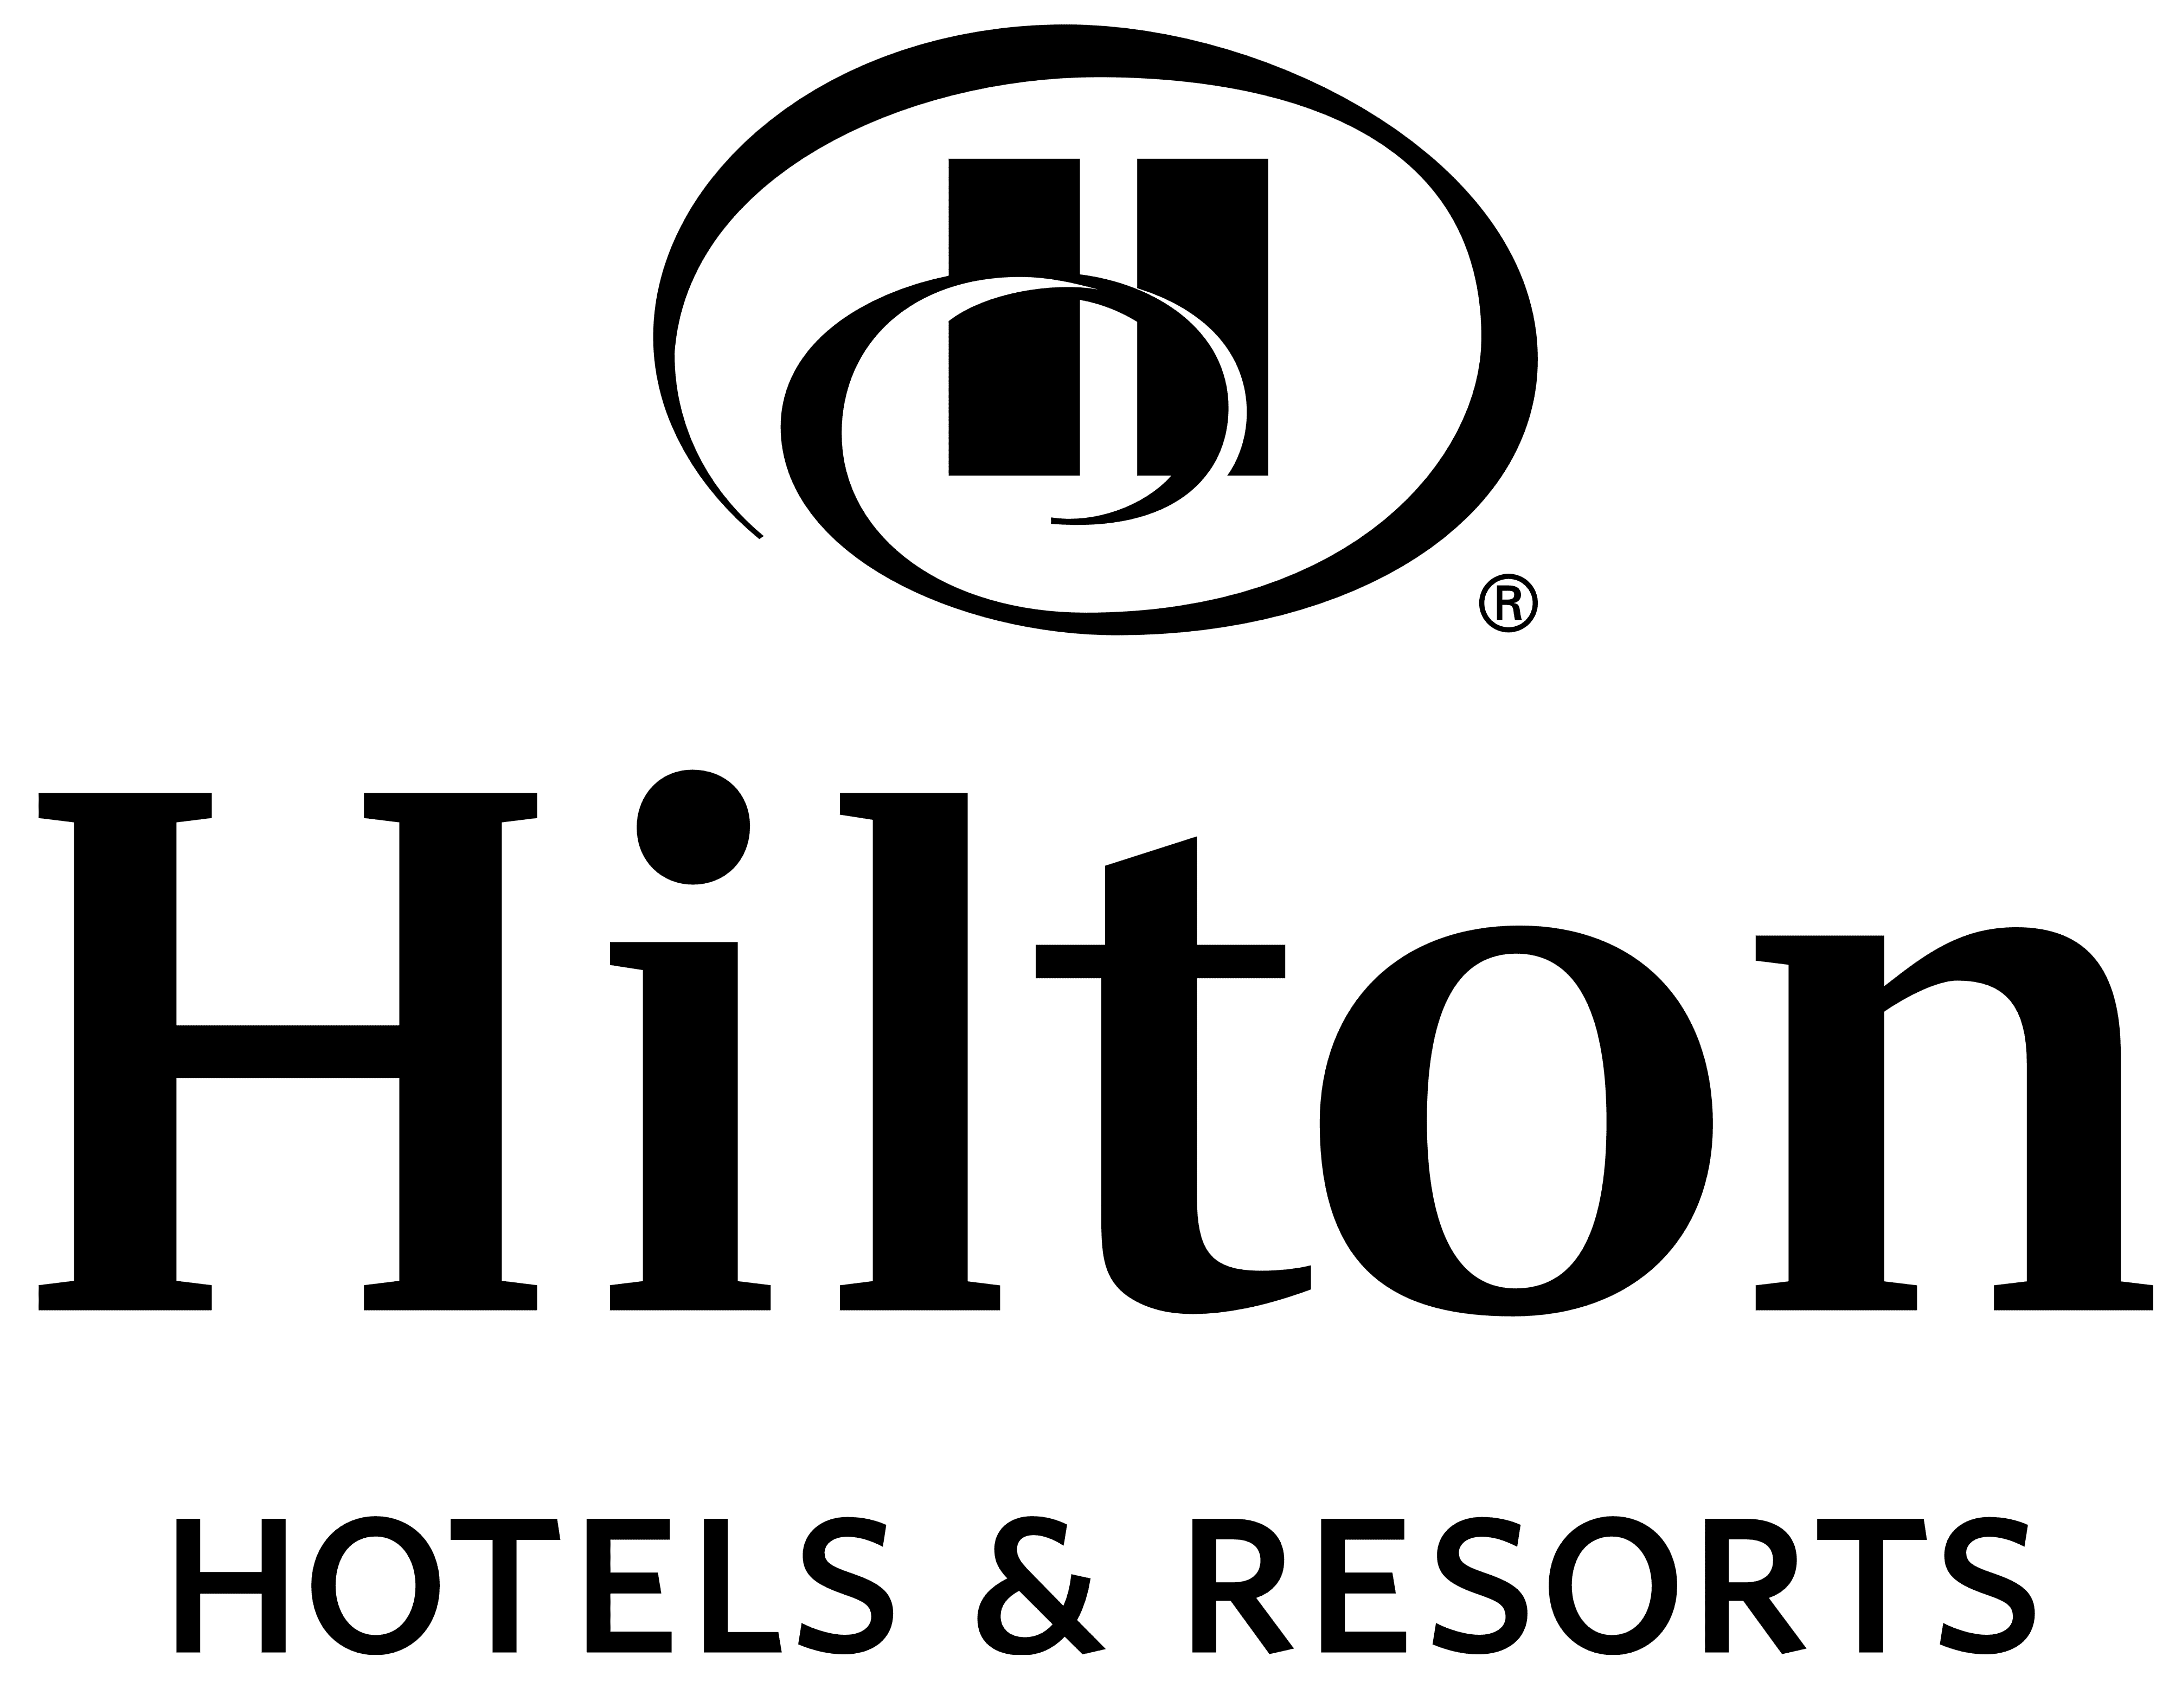 Hilton-logo